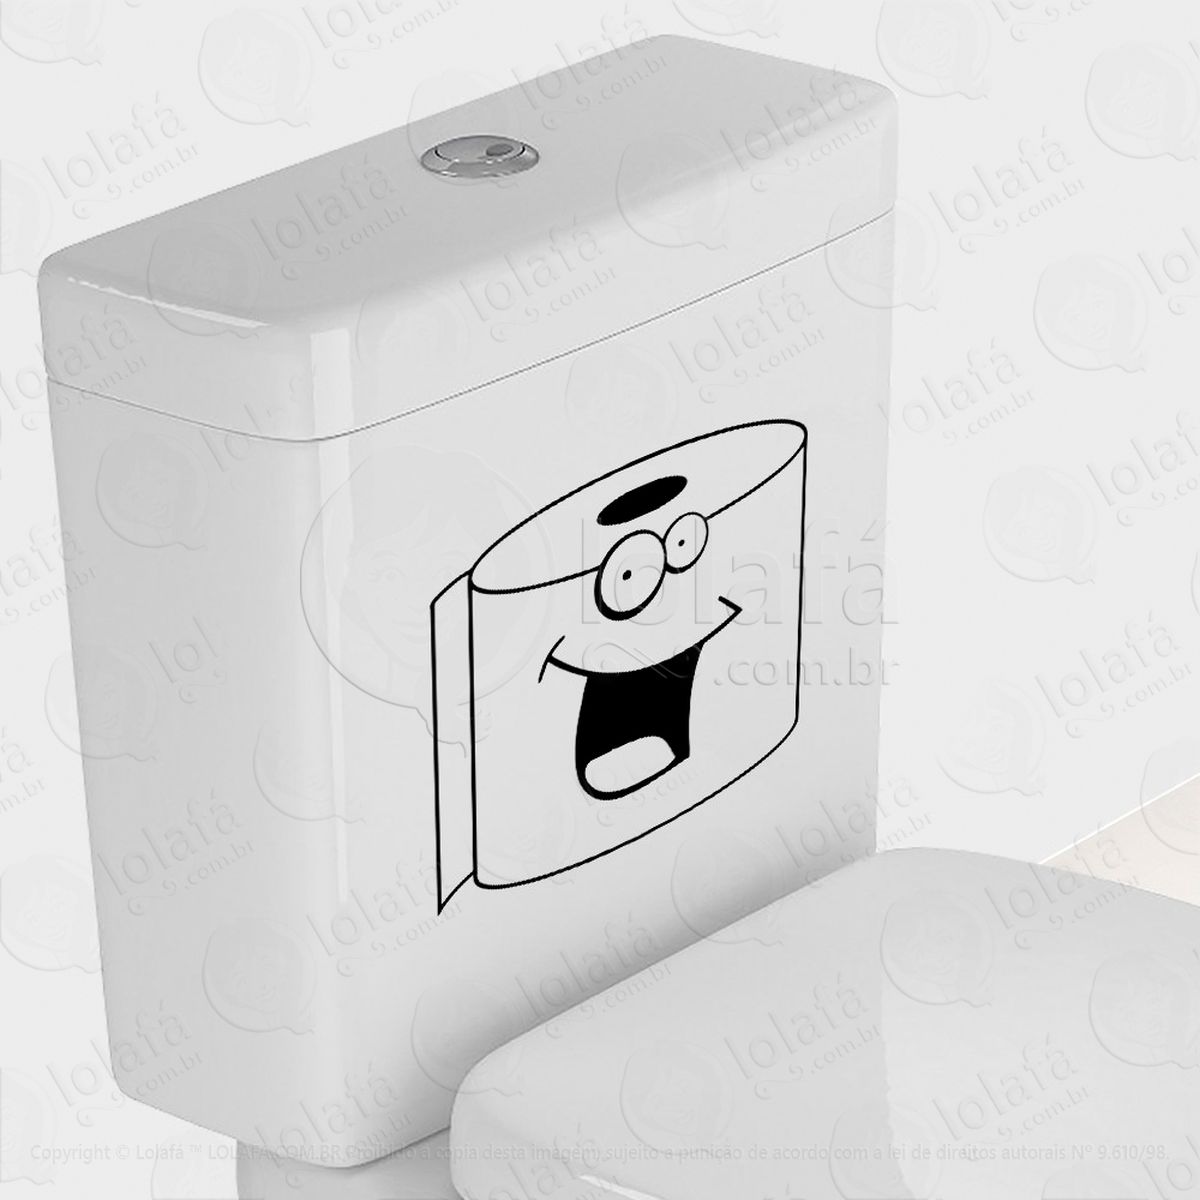 papel adesivo para vaso sanitário e privada - mod:59